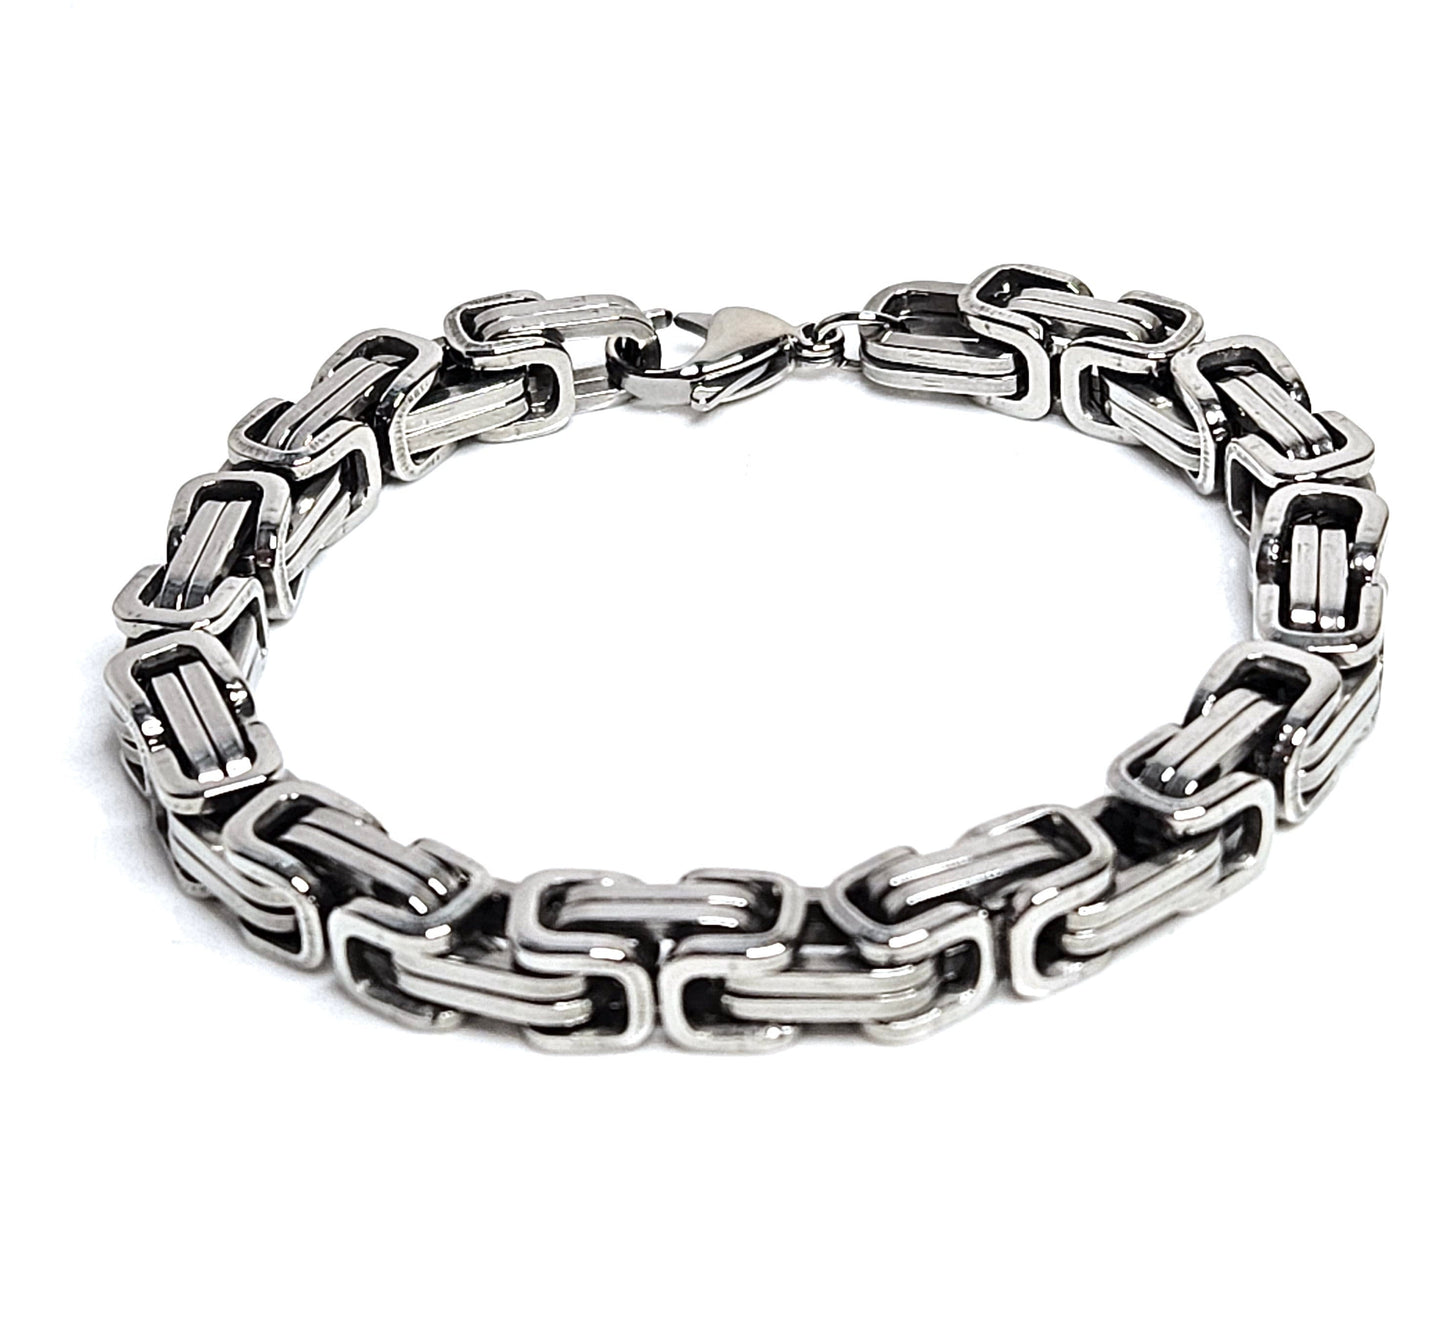 Mens Silver Titanium Steel Link Bracelet, Bracelets for Men, Male Jewellery, Silver Chain Bracelet, Fashion Gift for Him